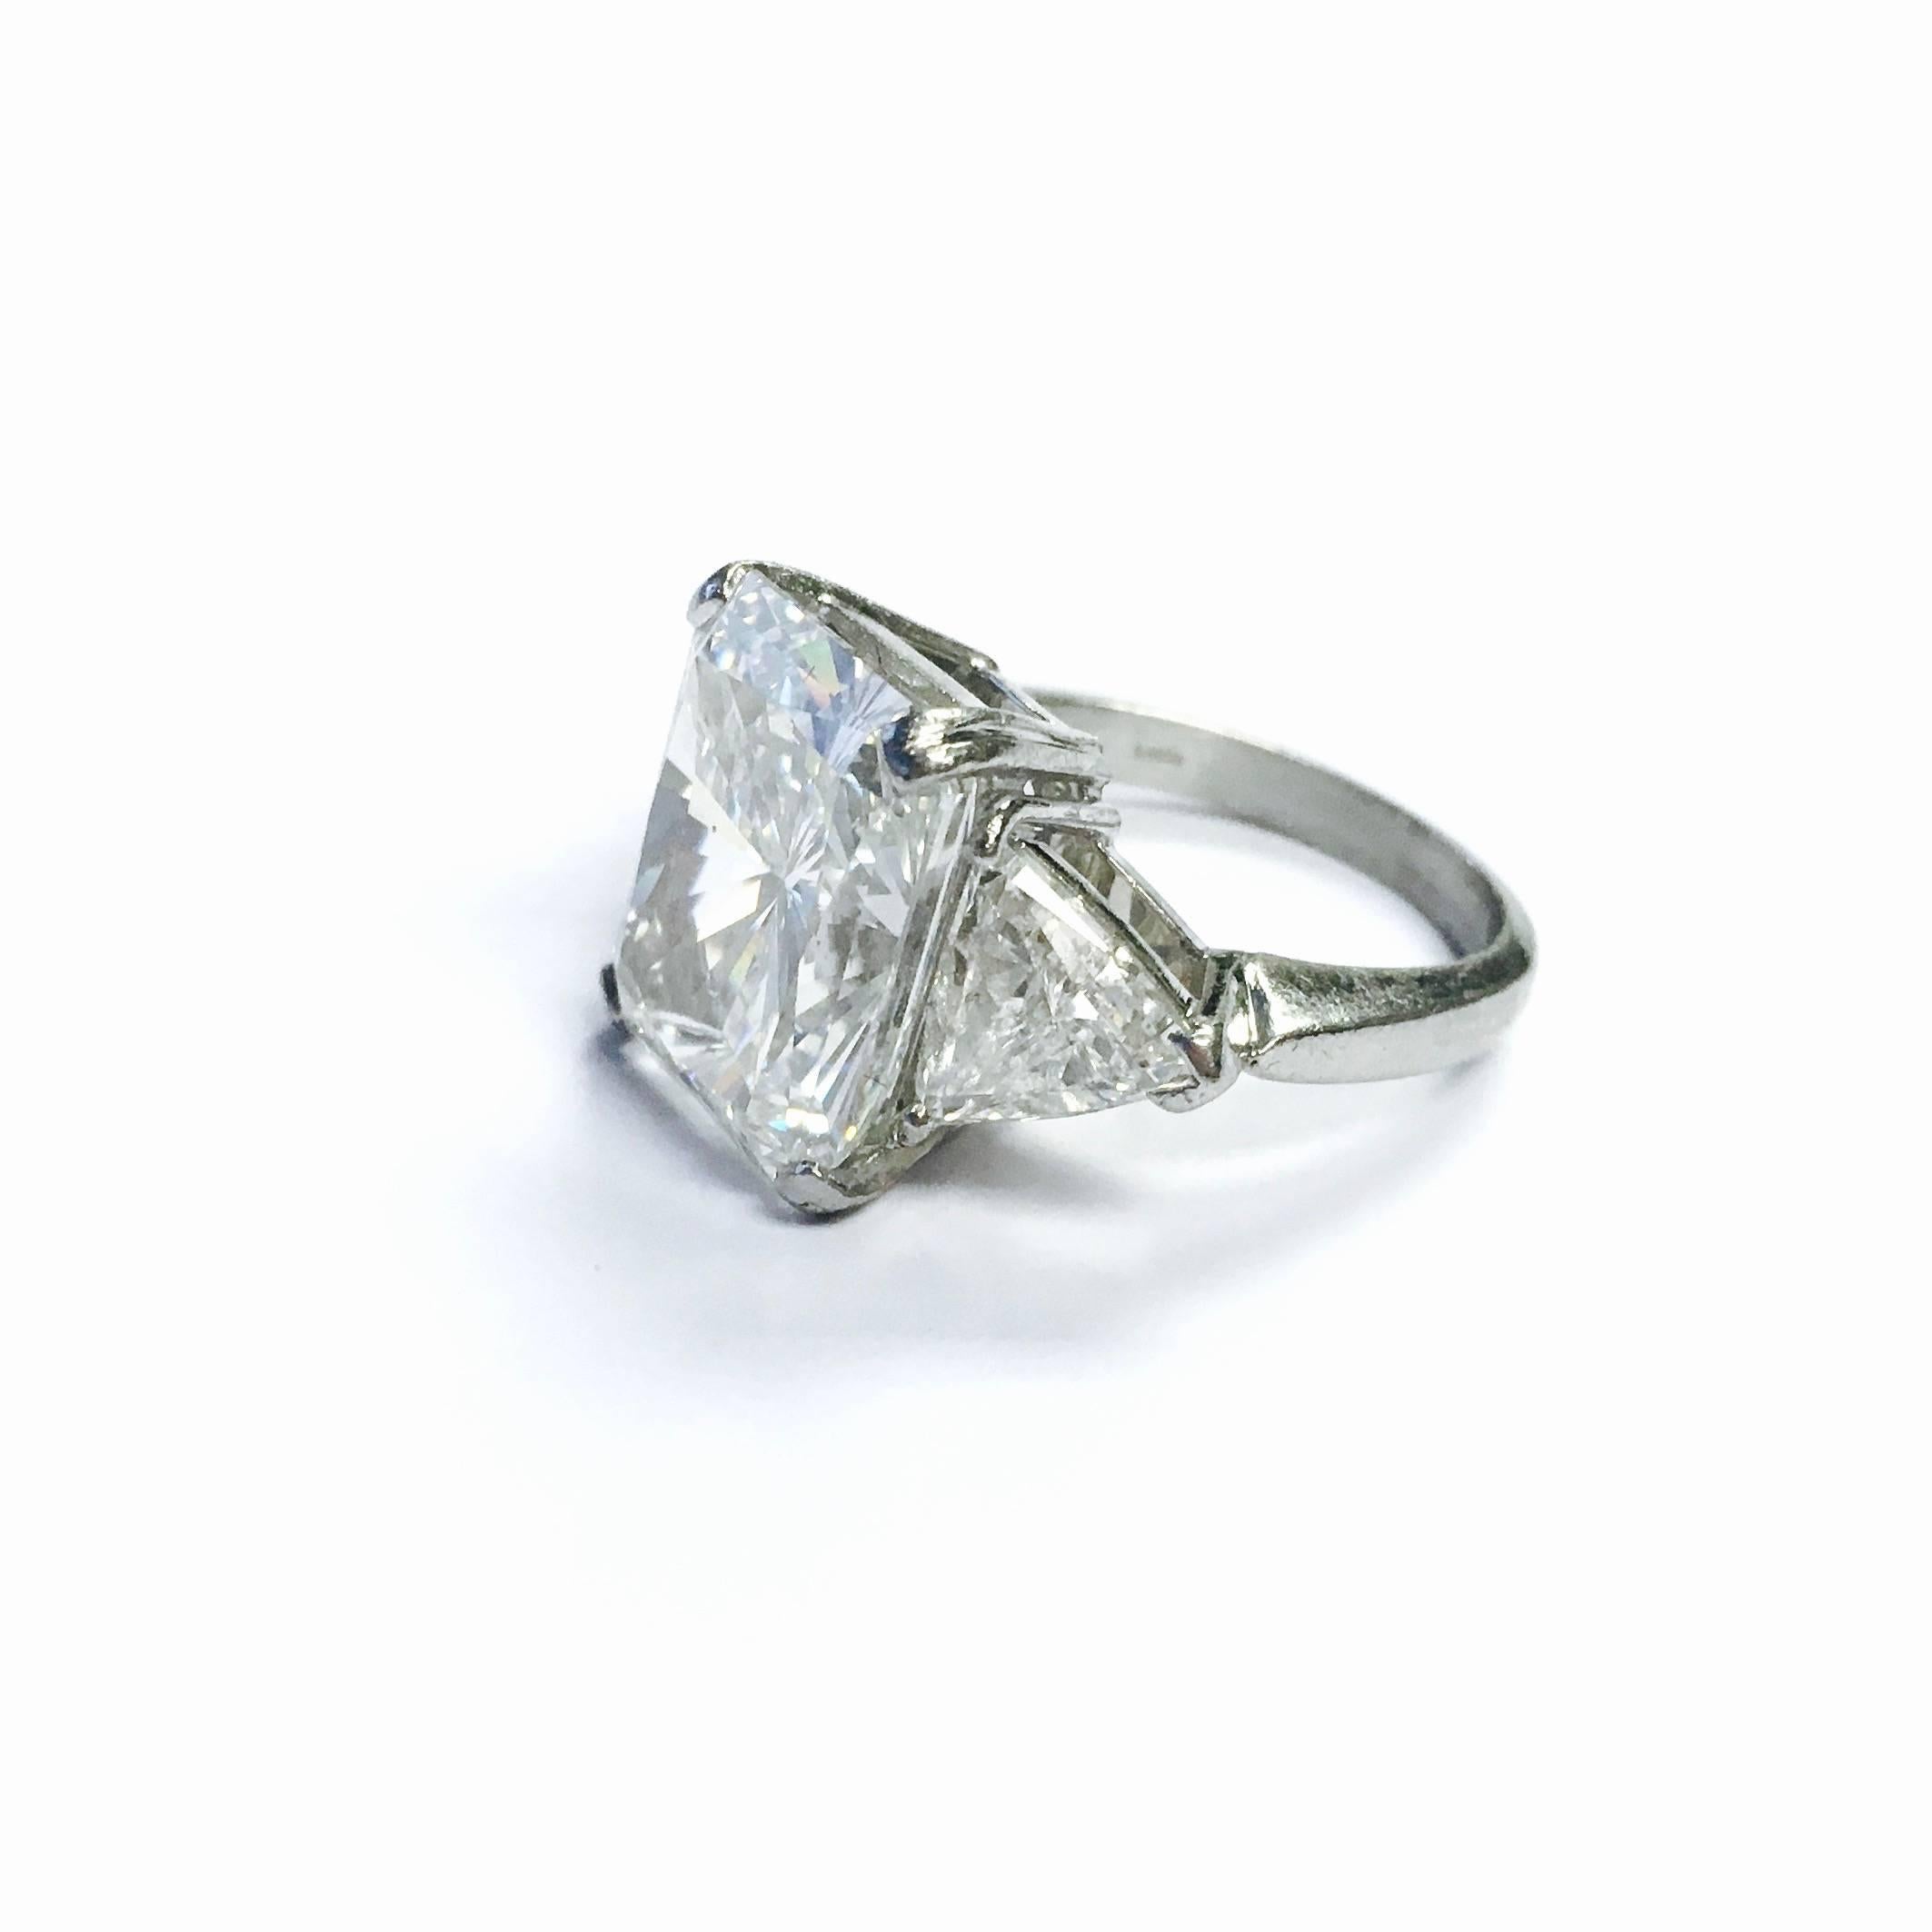 1.8 carat radiant cut diamond